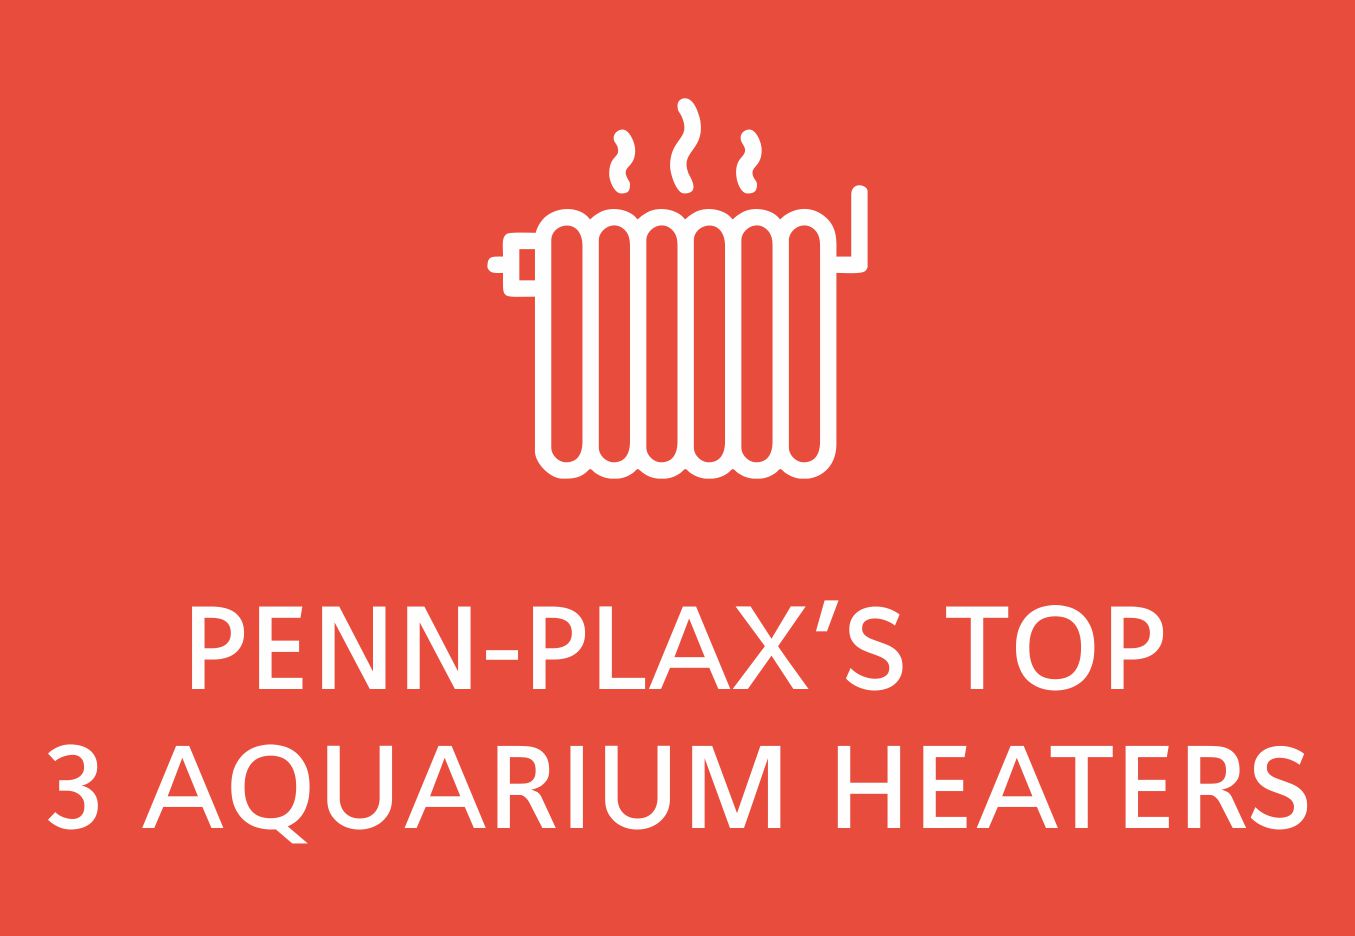 Penn-Plax’s top 3 aquarium heaters